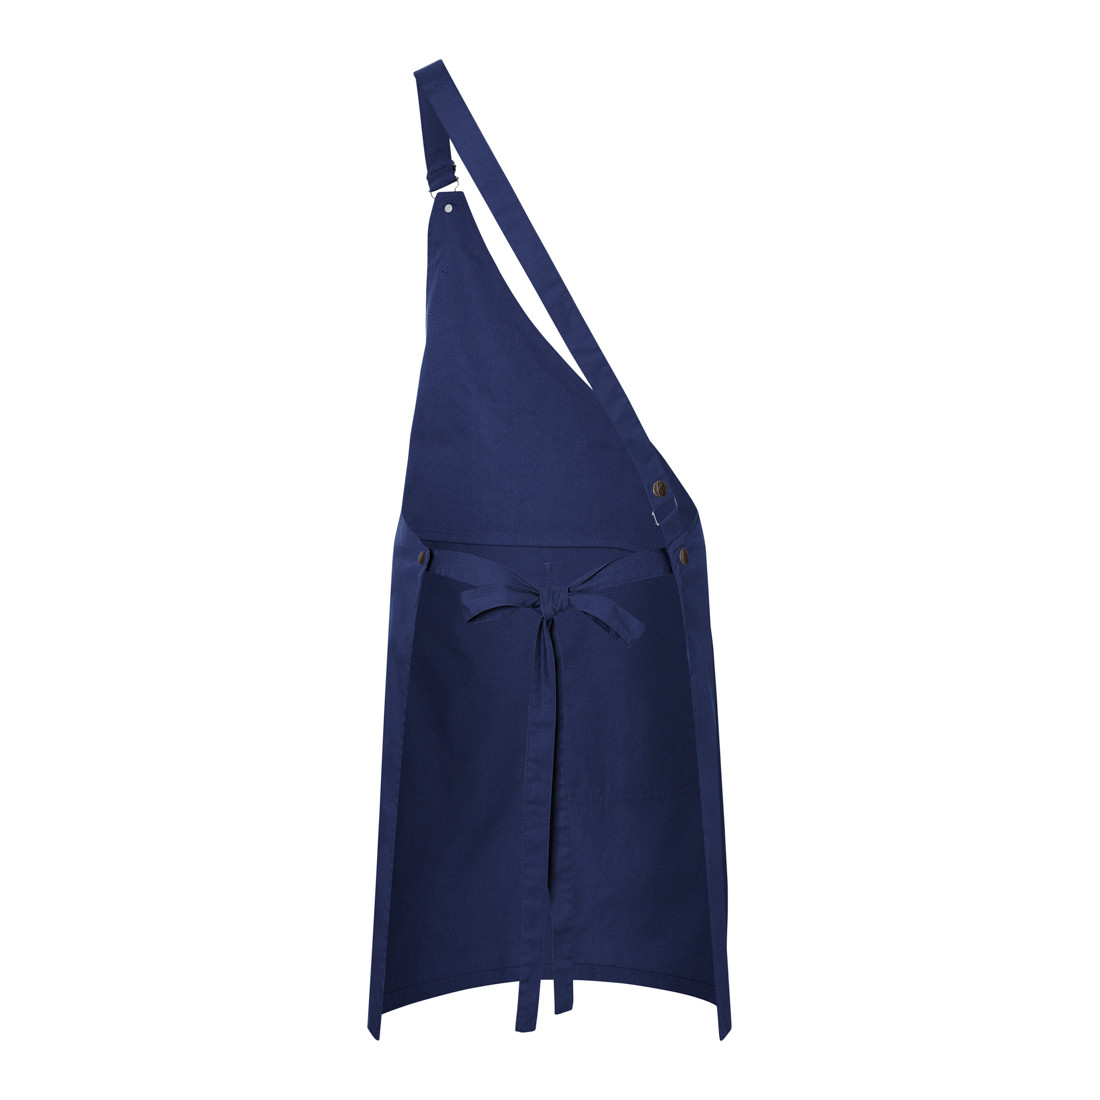 Asymmetrical Bib Apron Classic with Pocket - Safetywear